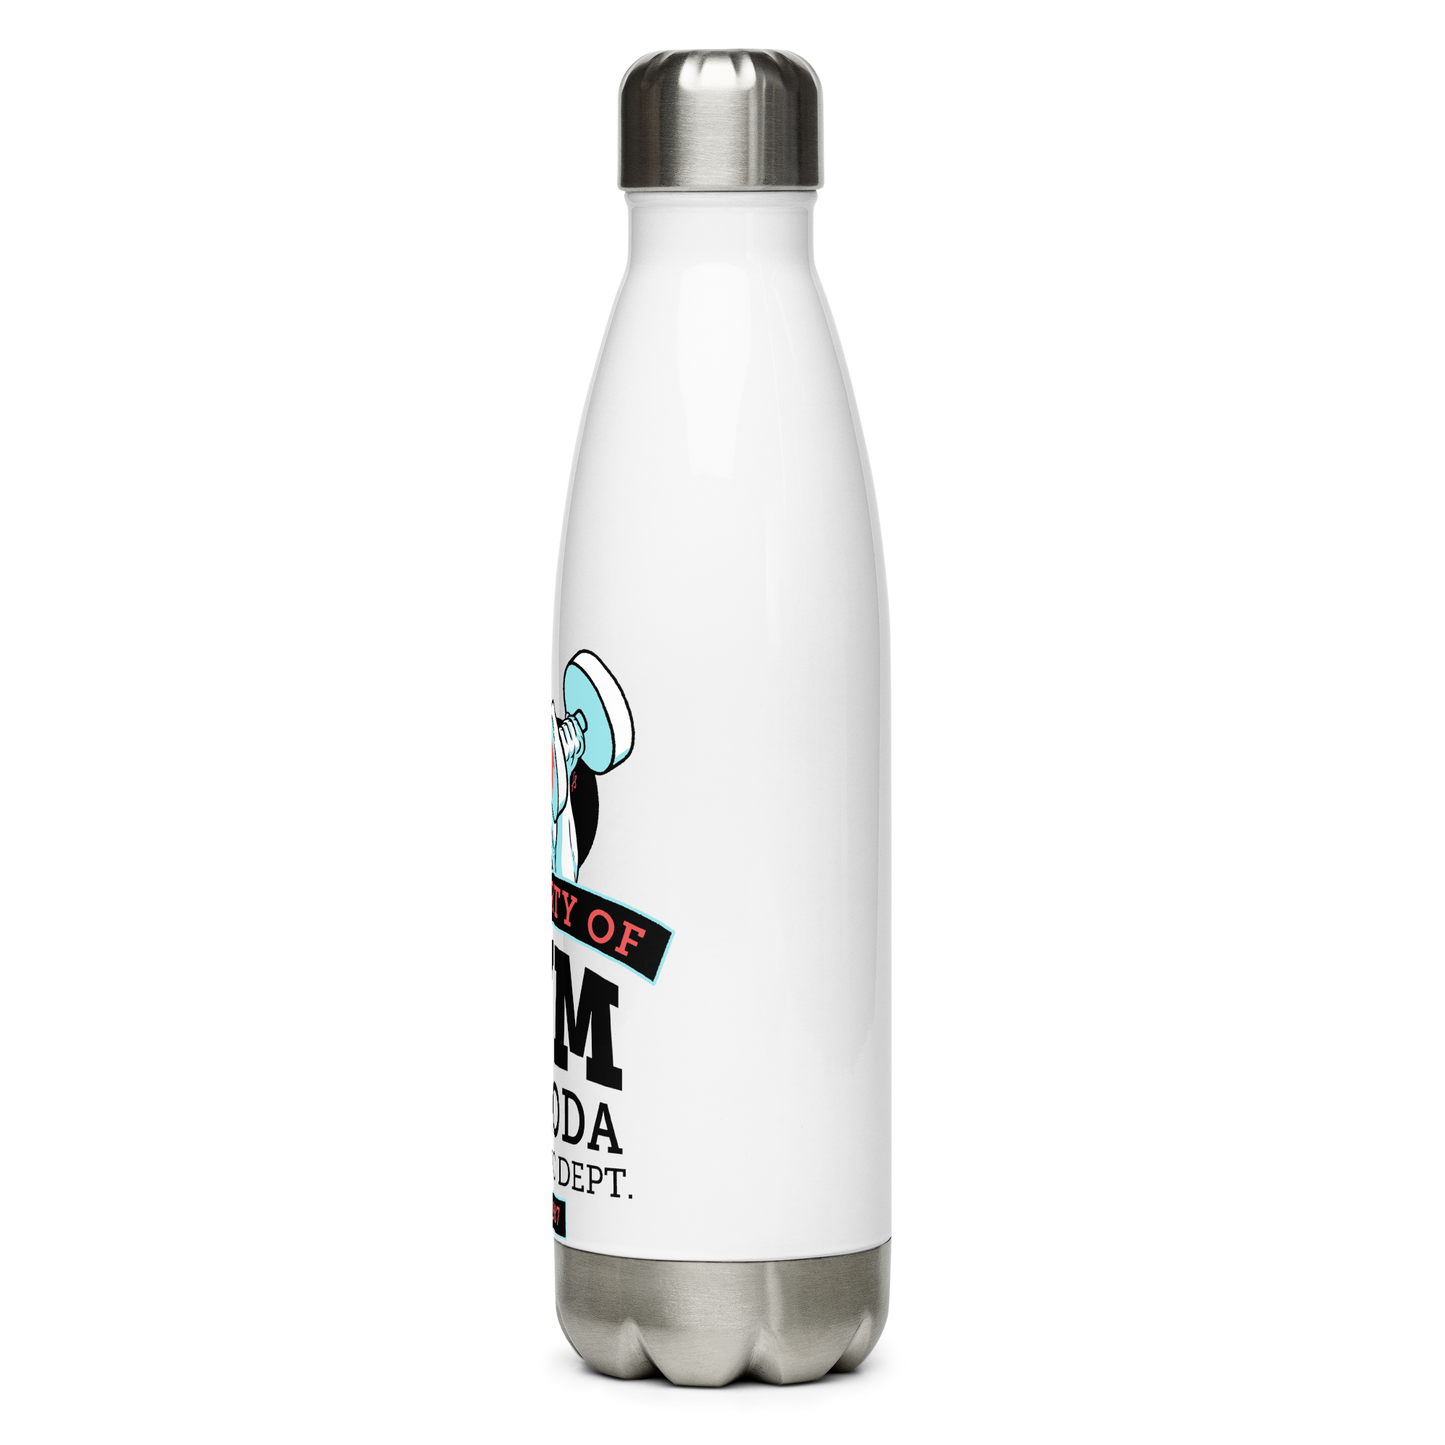 Gym Shimoda Stainless Steel Water Bottle